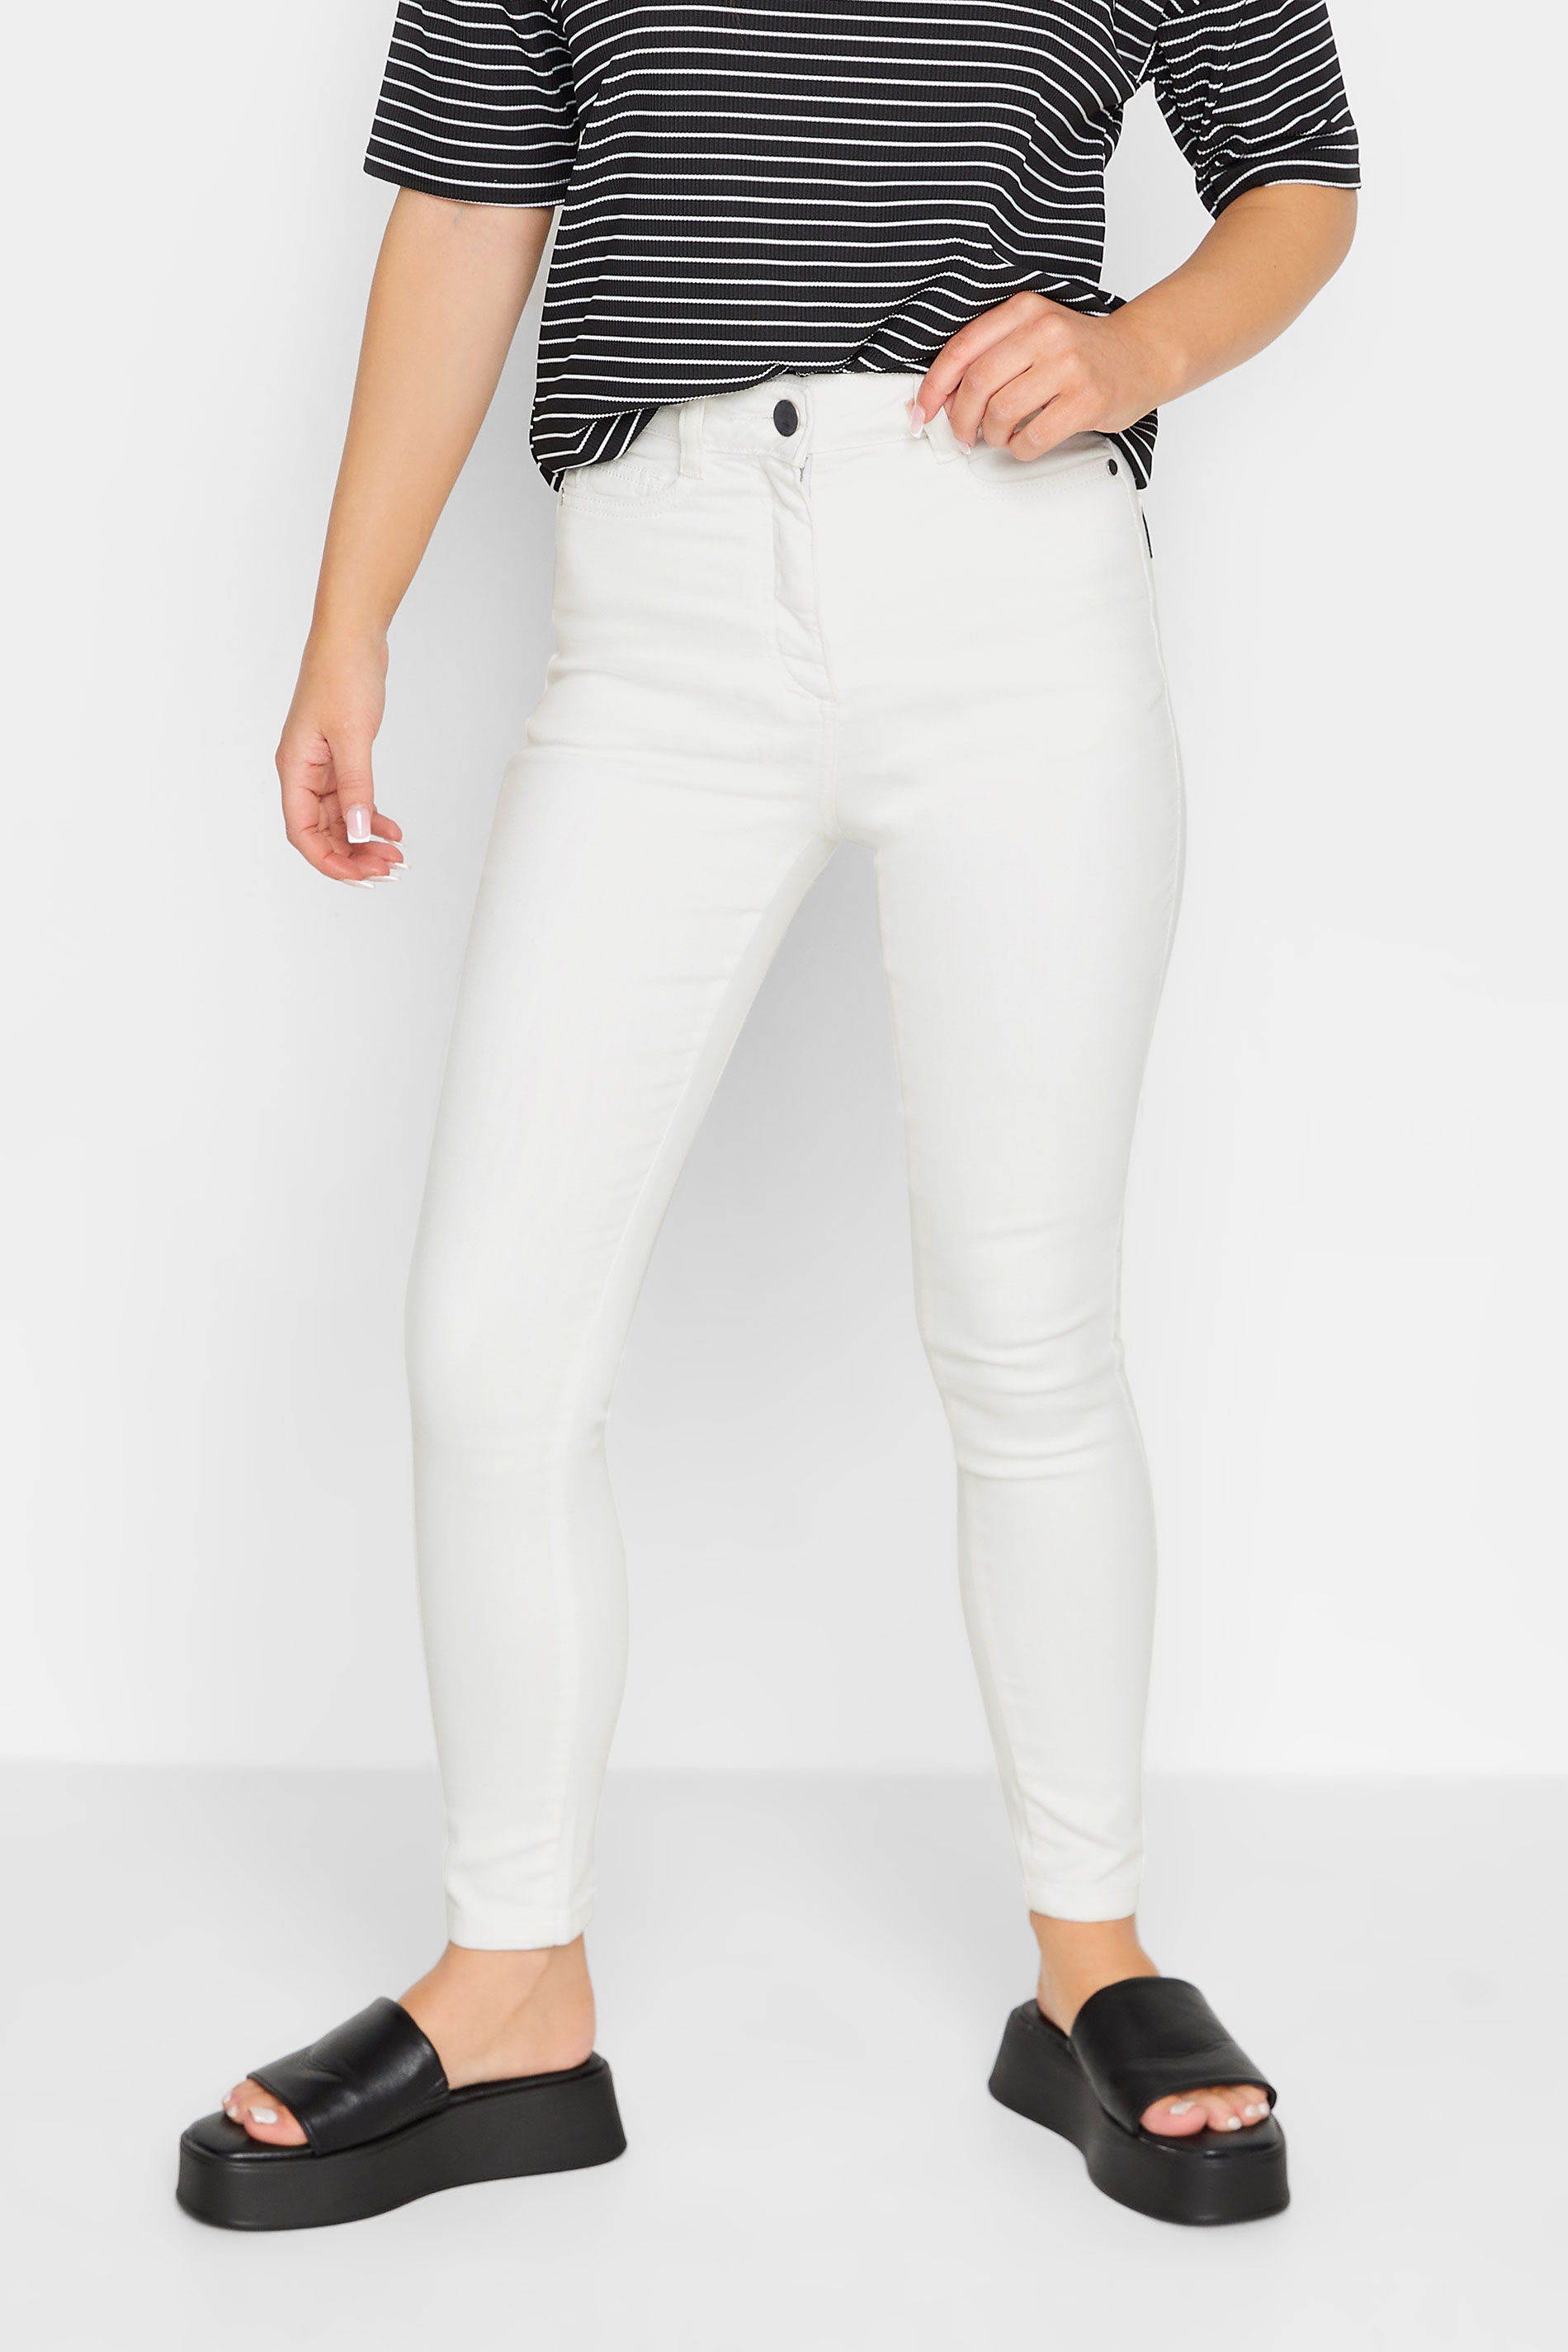 Petite White Skinny Jeans | PixieGirl  1